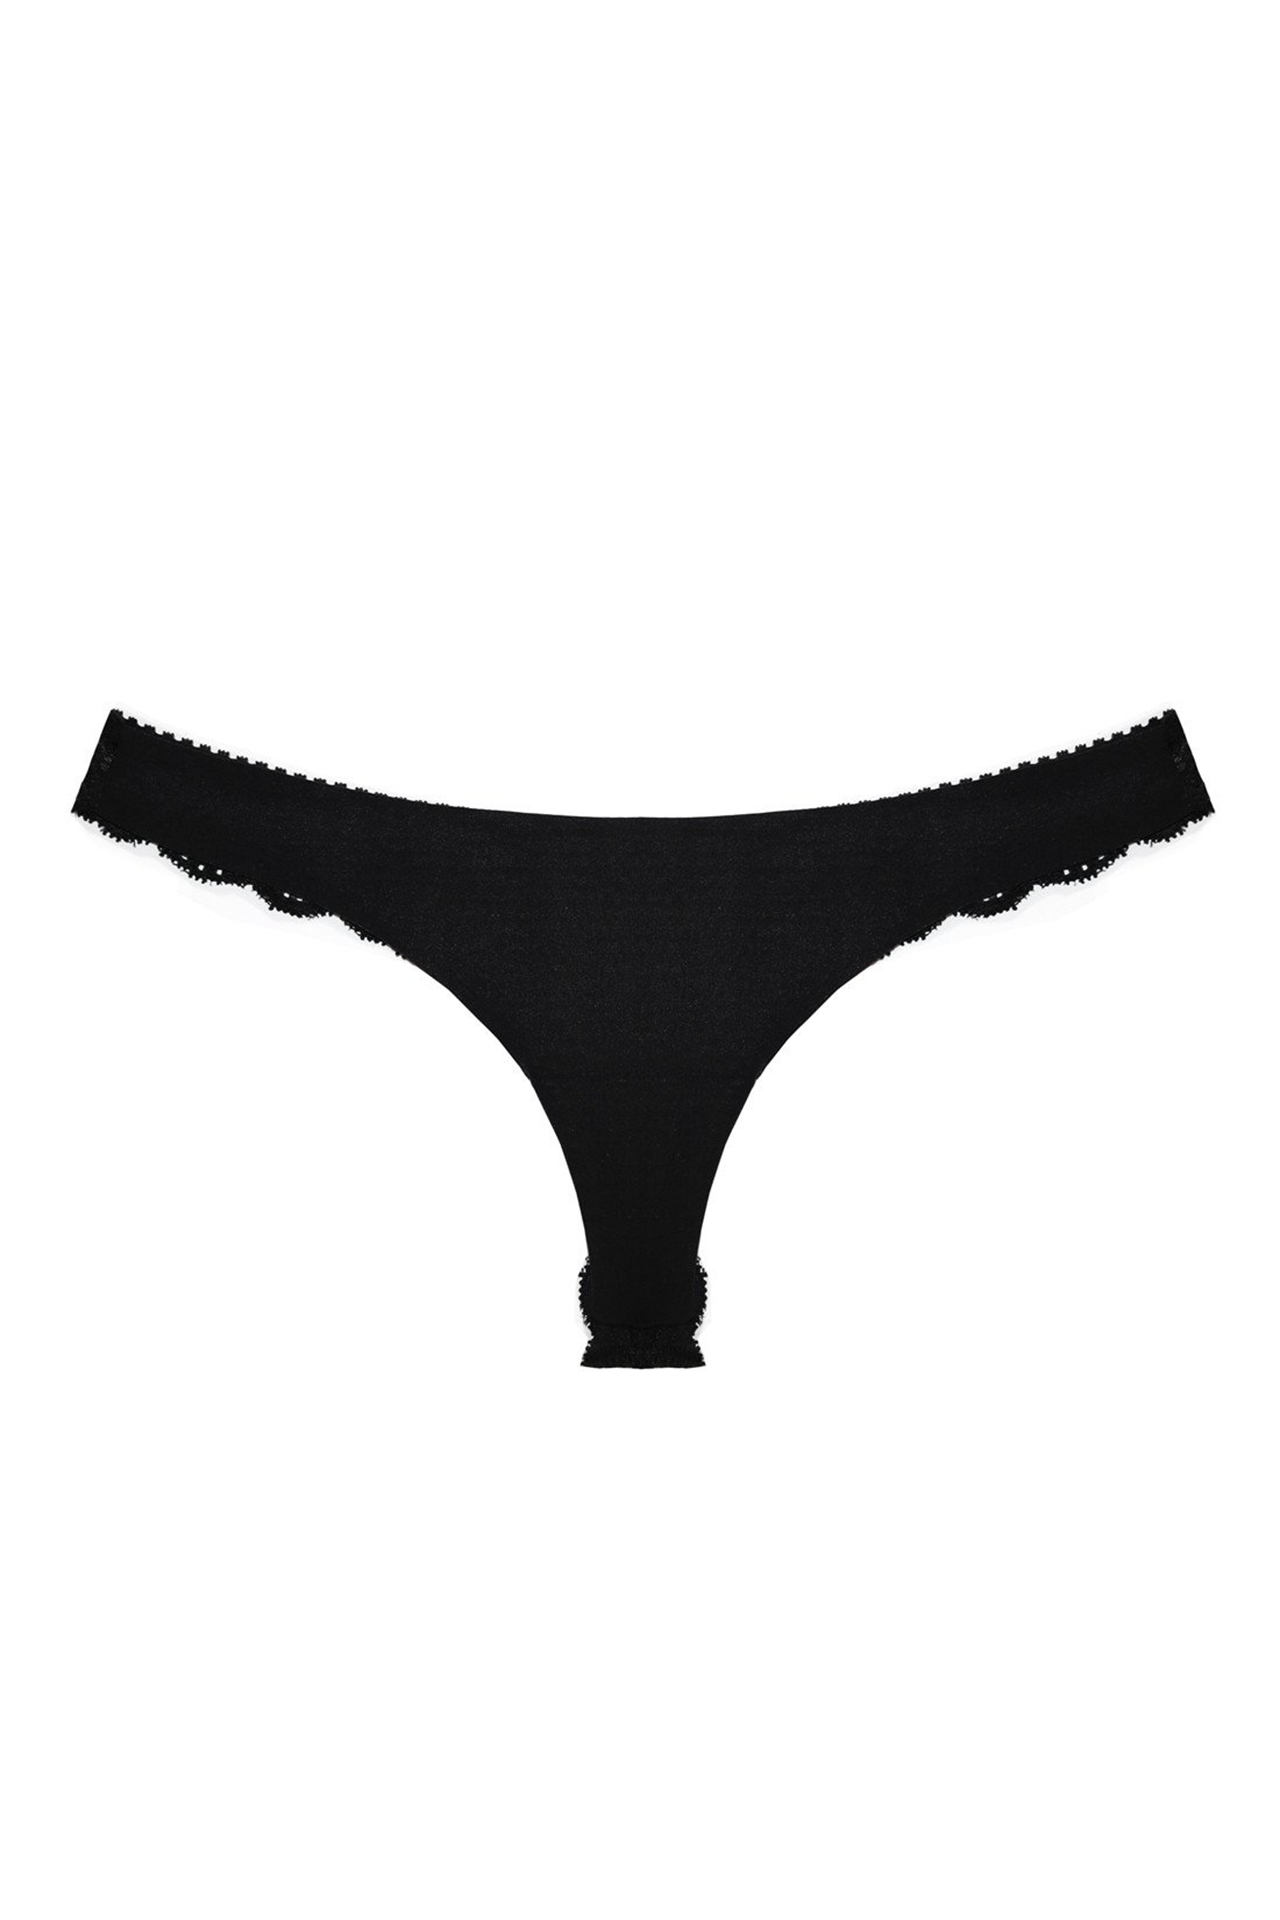  Yuto G-String Thongs for Women G-String Thong Panty